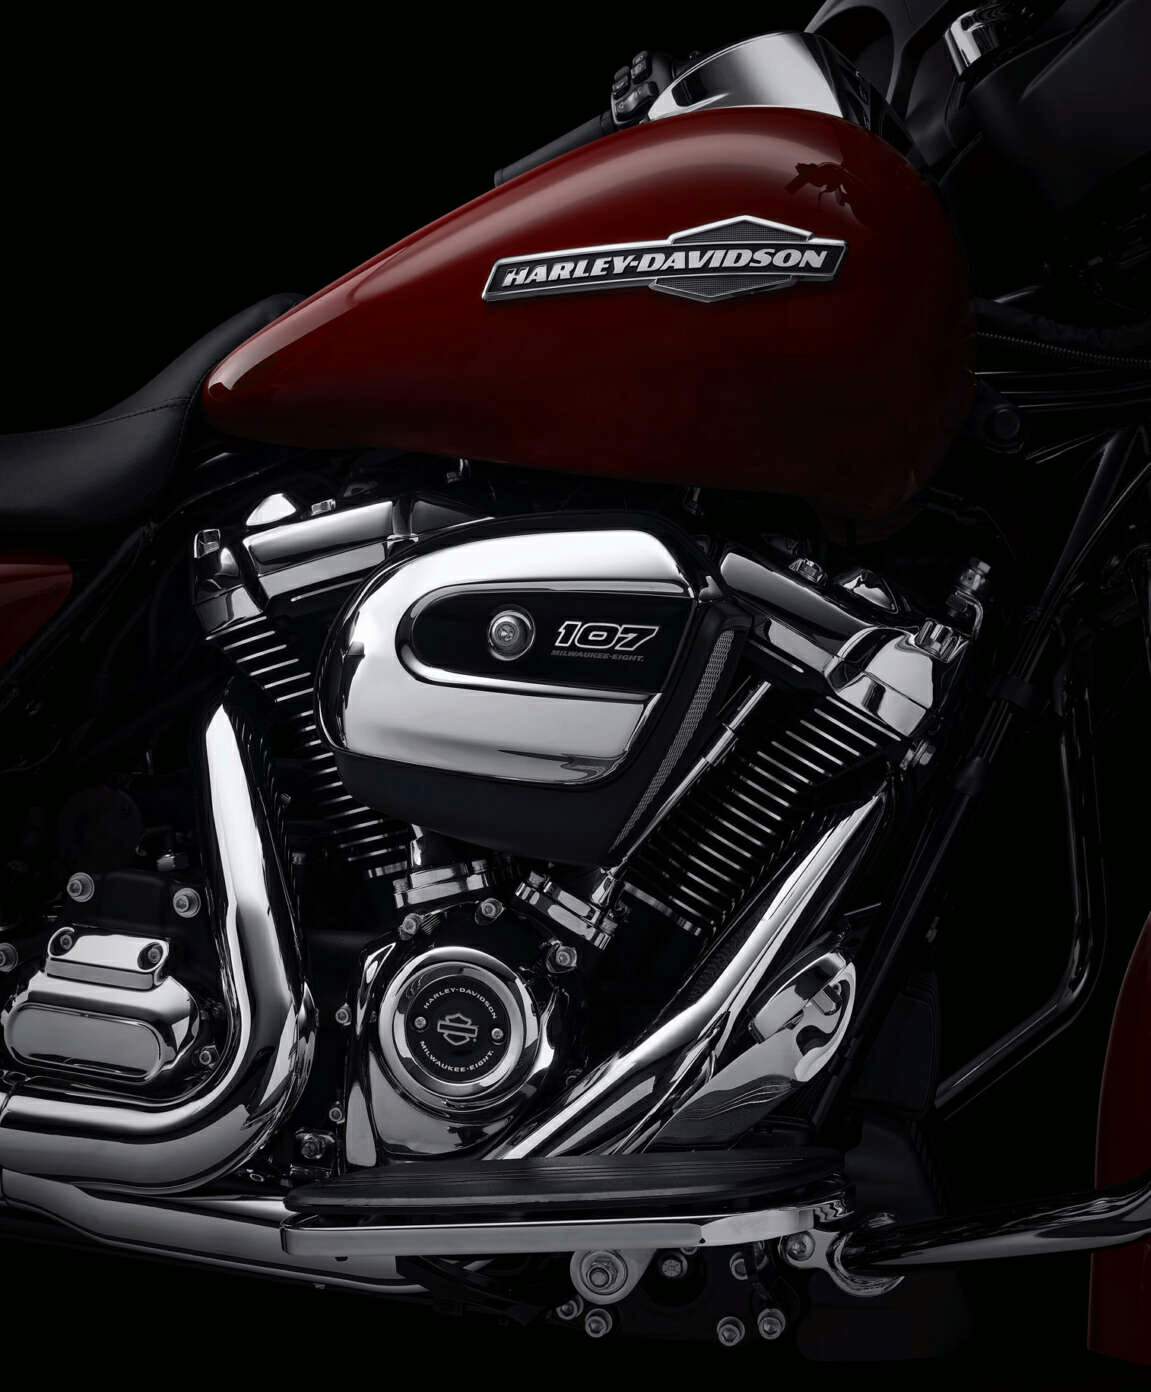 2020 - 2021 Harley Davidson FLHX Street Glide